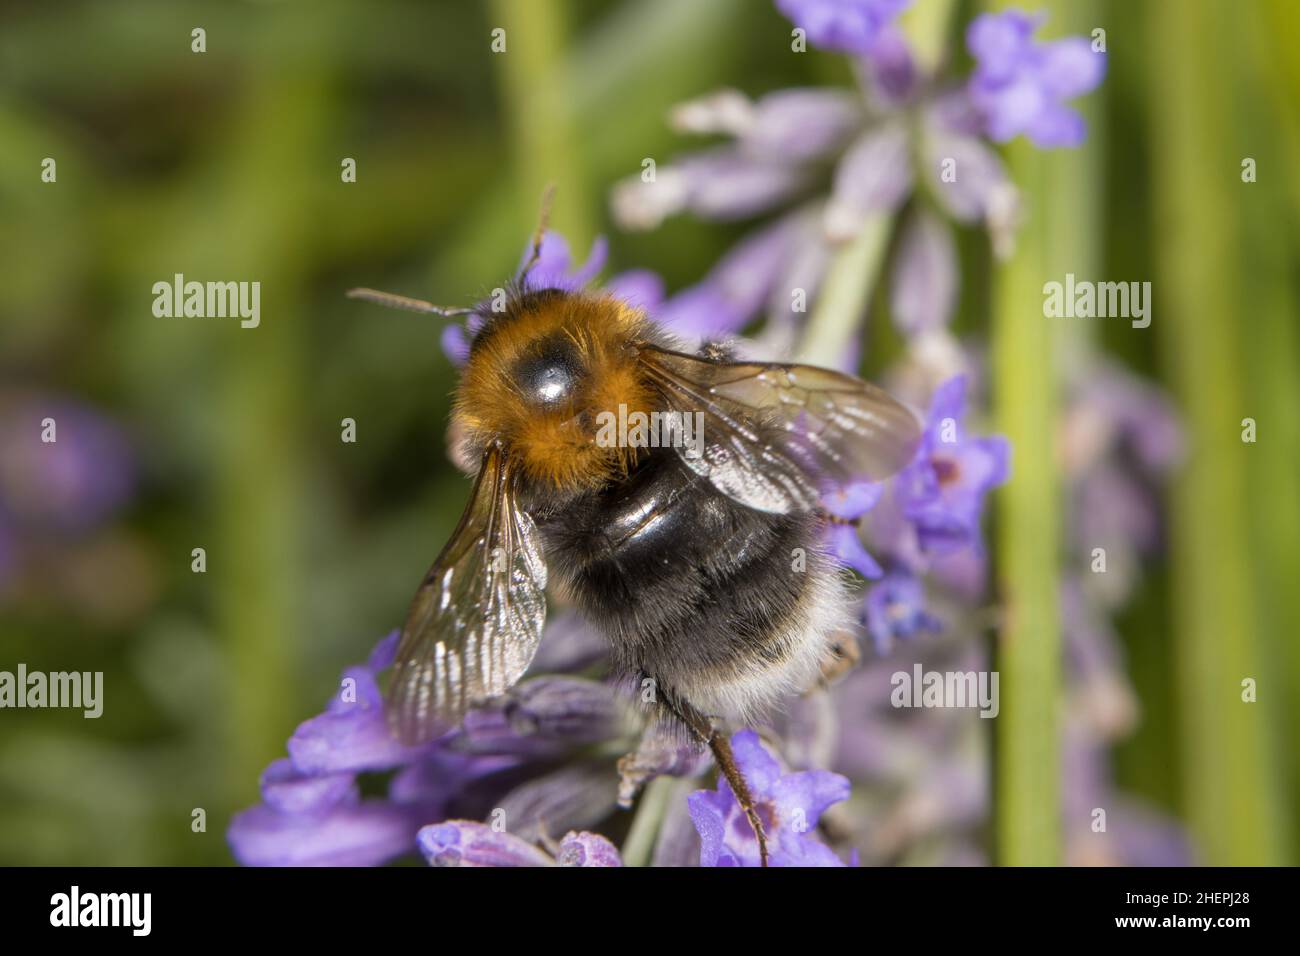 Tree Bumblebee, New Garden Bumblebee (Bombus hypnorum, Psithyrus hypnorum), sucks nectar from lavender, Germany Stock Photo